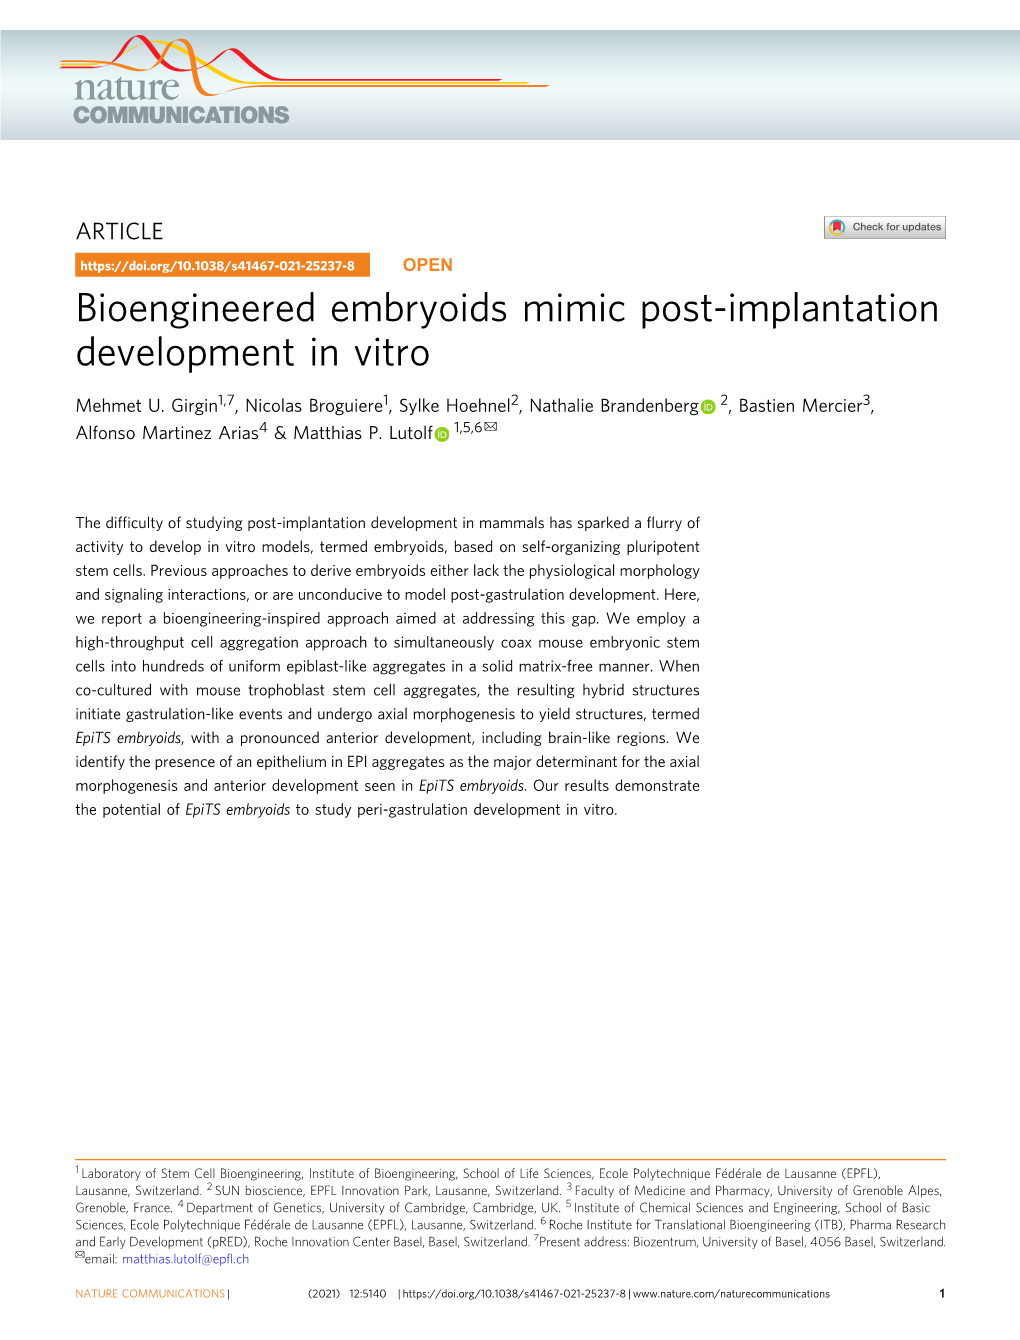 Bioengineered Embryoids Mimic Post-Implantation Development in Vitro